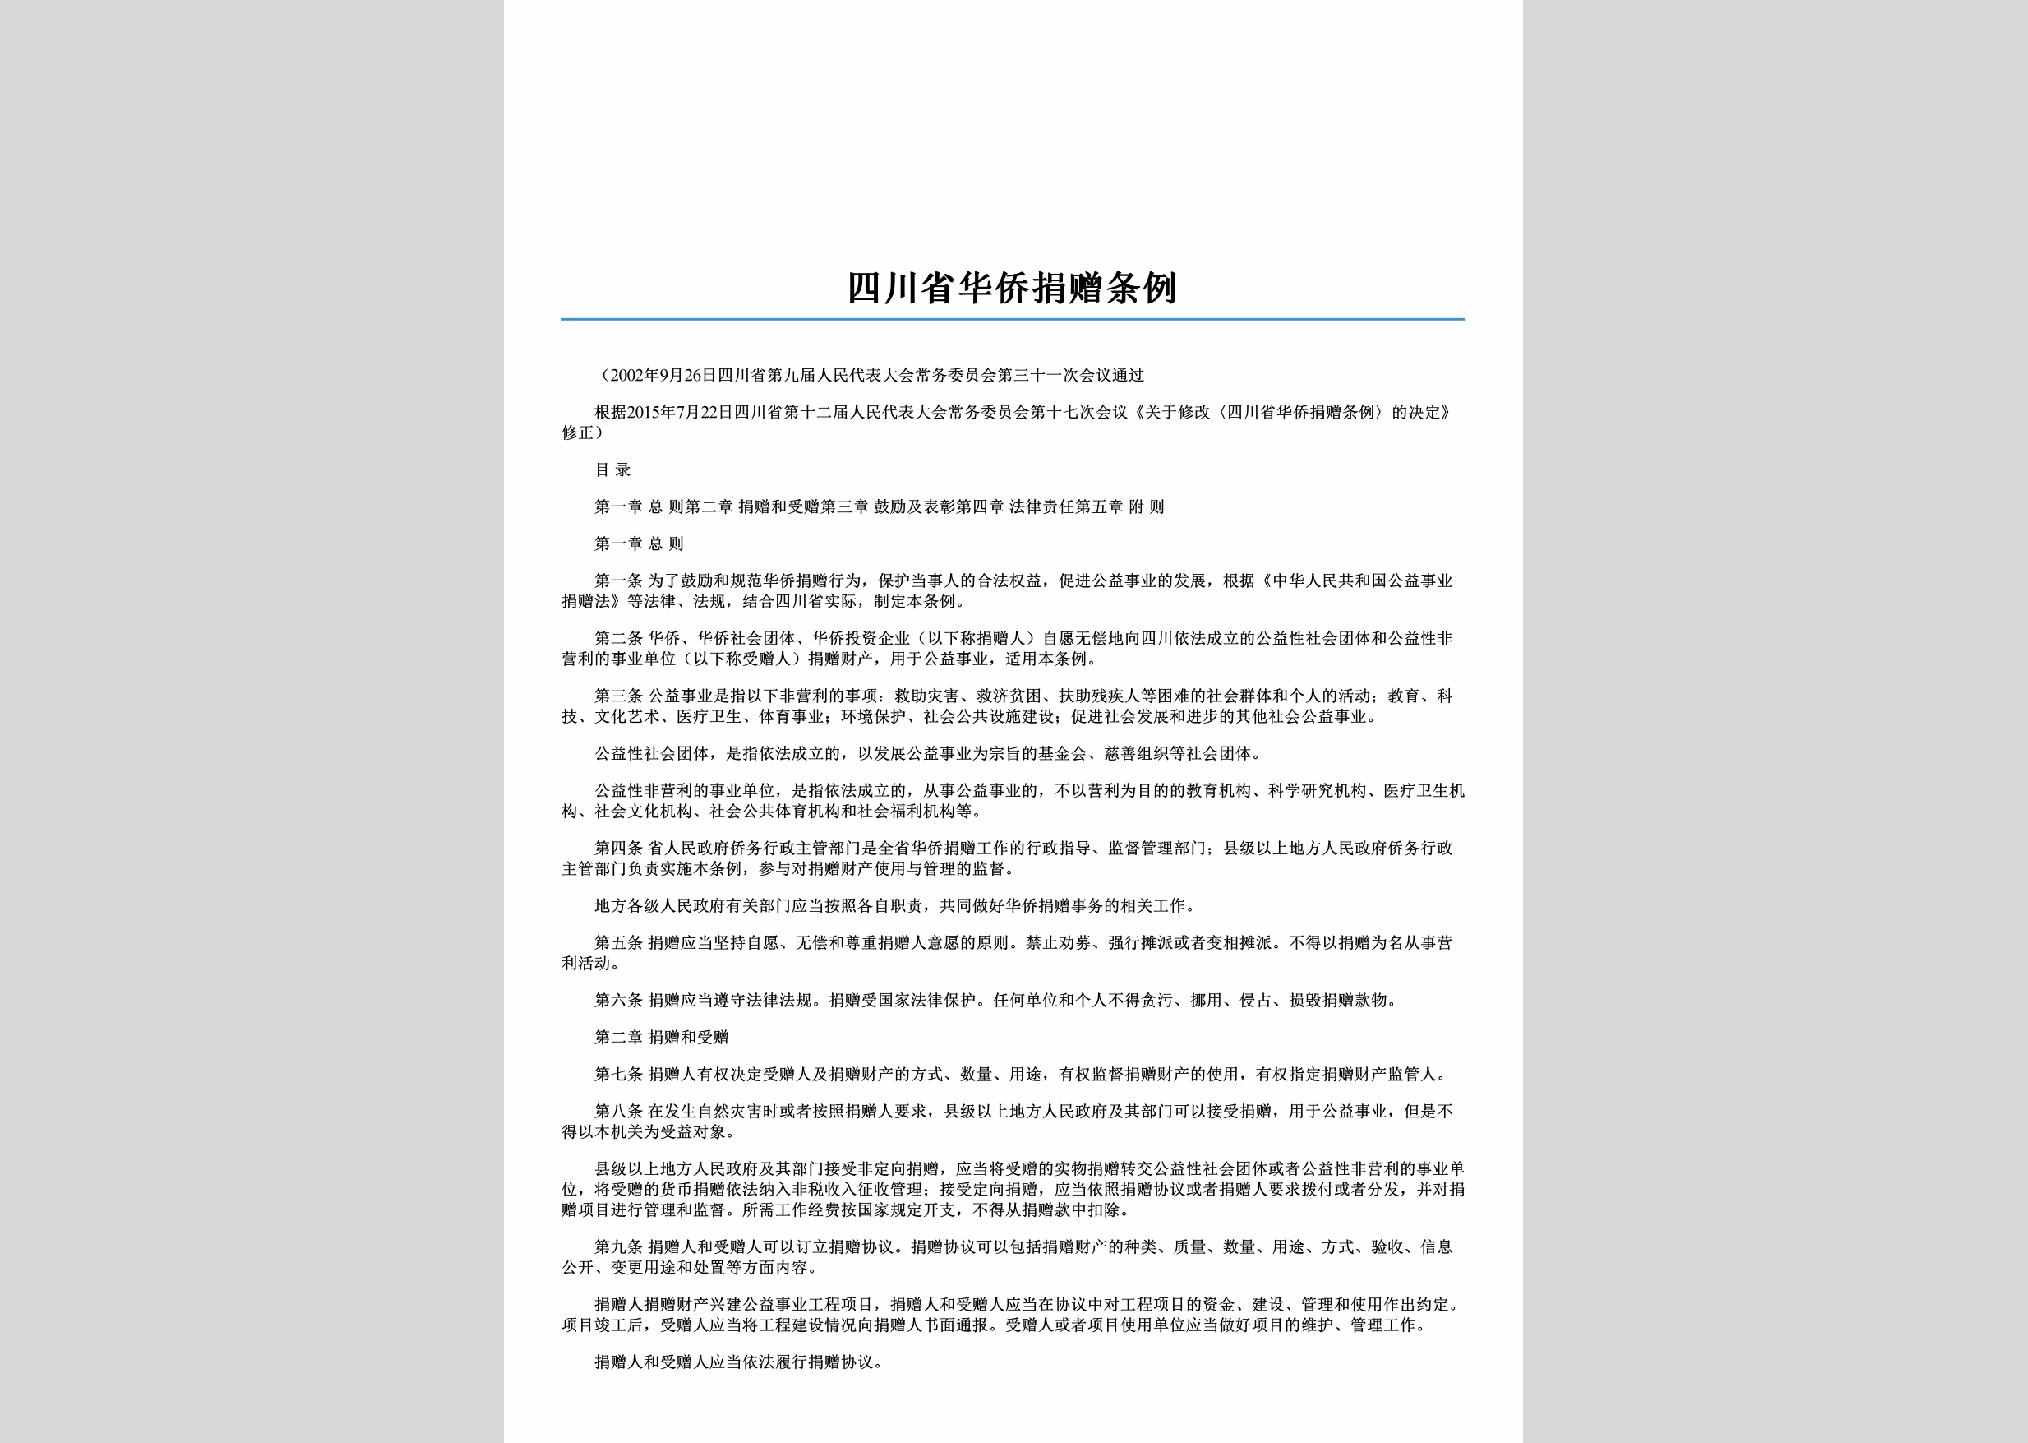 SC-HQJZTL-2002：四川省华侨捐赠条例